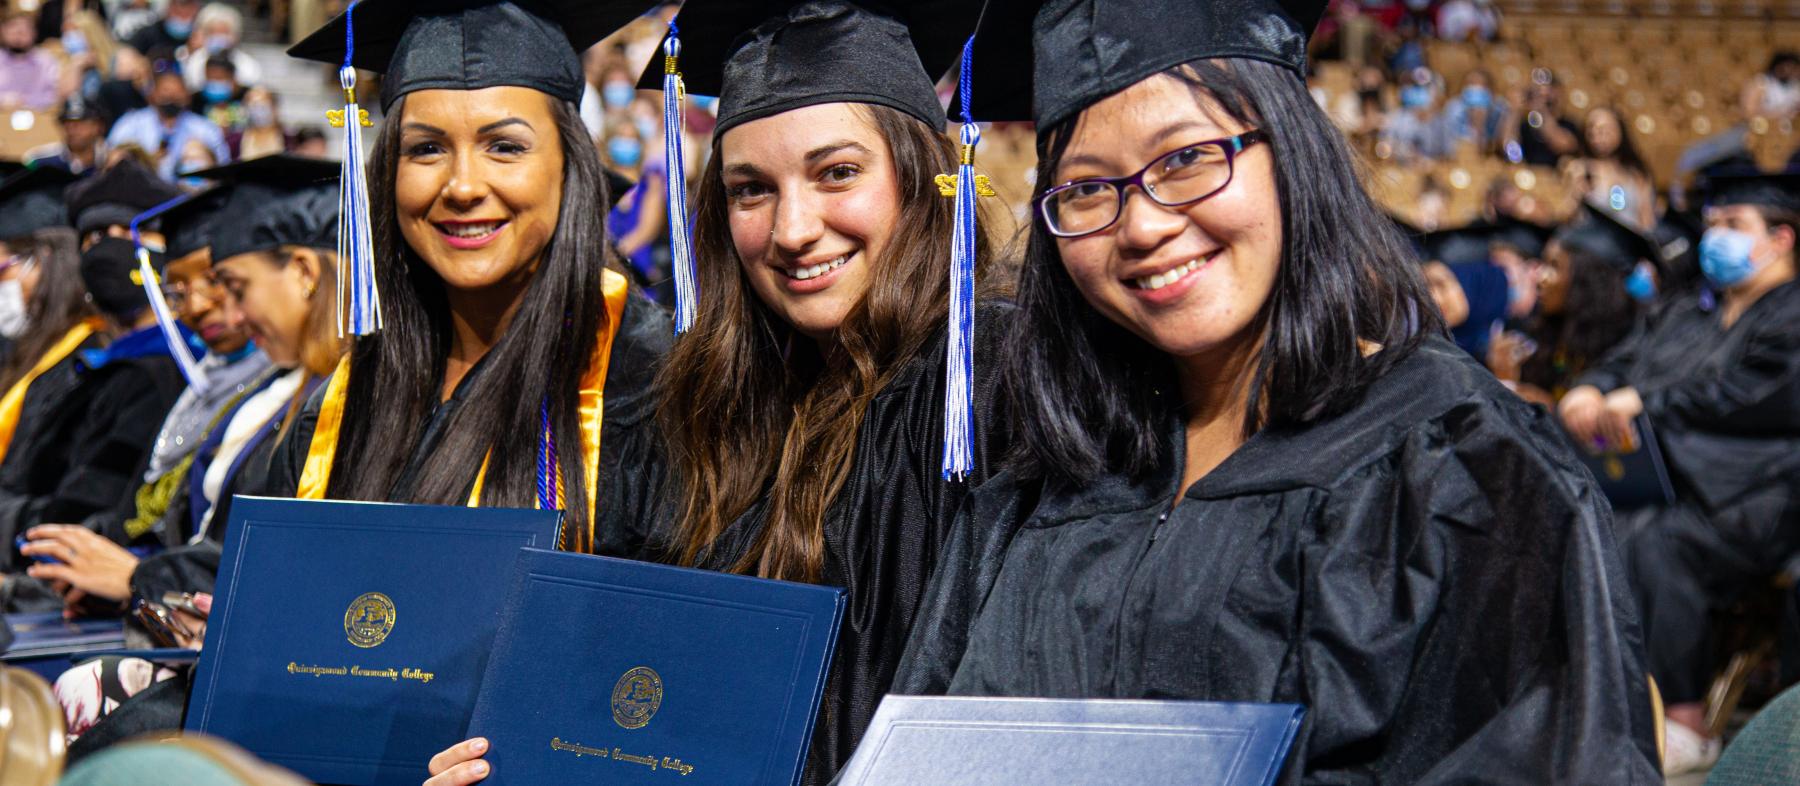 Three graduates in regalia show off their diplomas at commencement